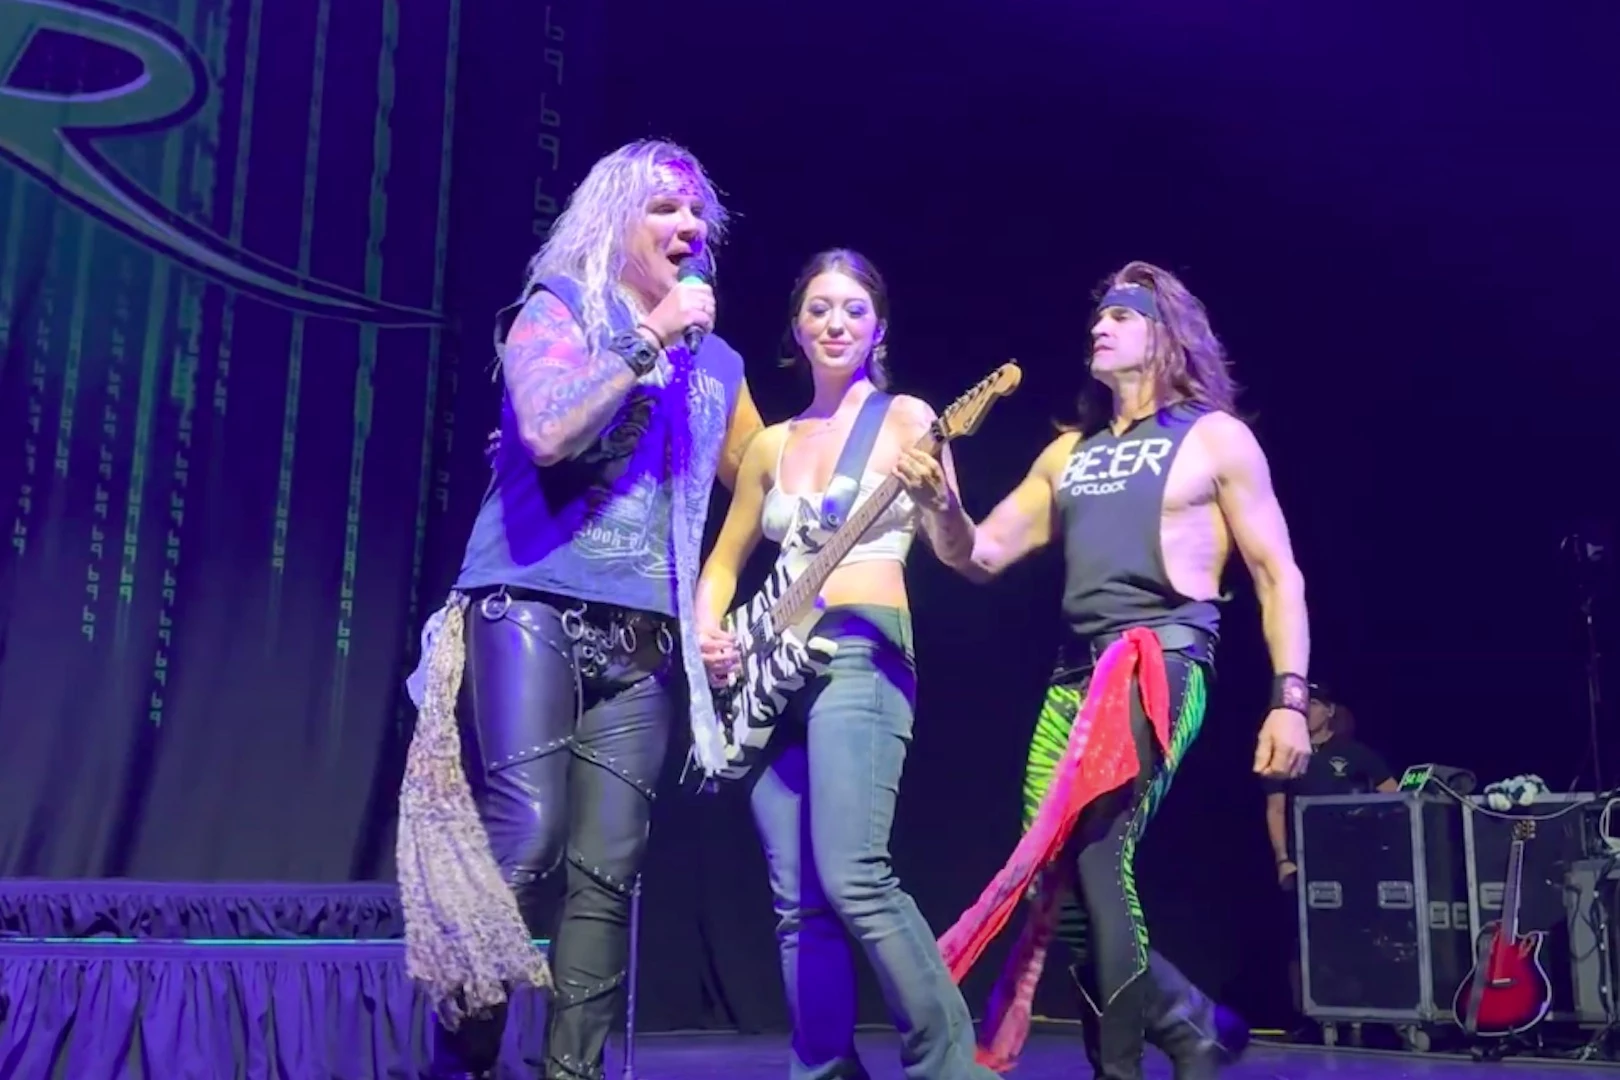 Steel Panther Joined by 'Top Gun' Guitarist for Van Halen Cover